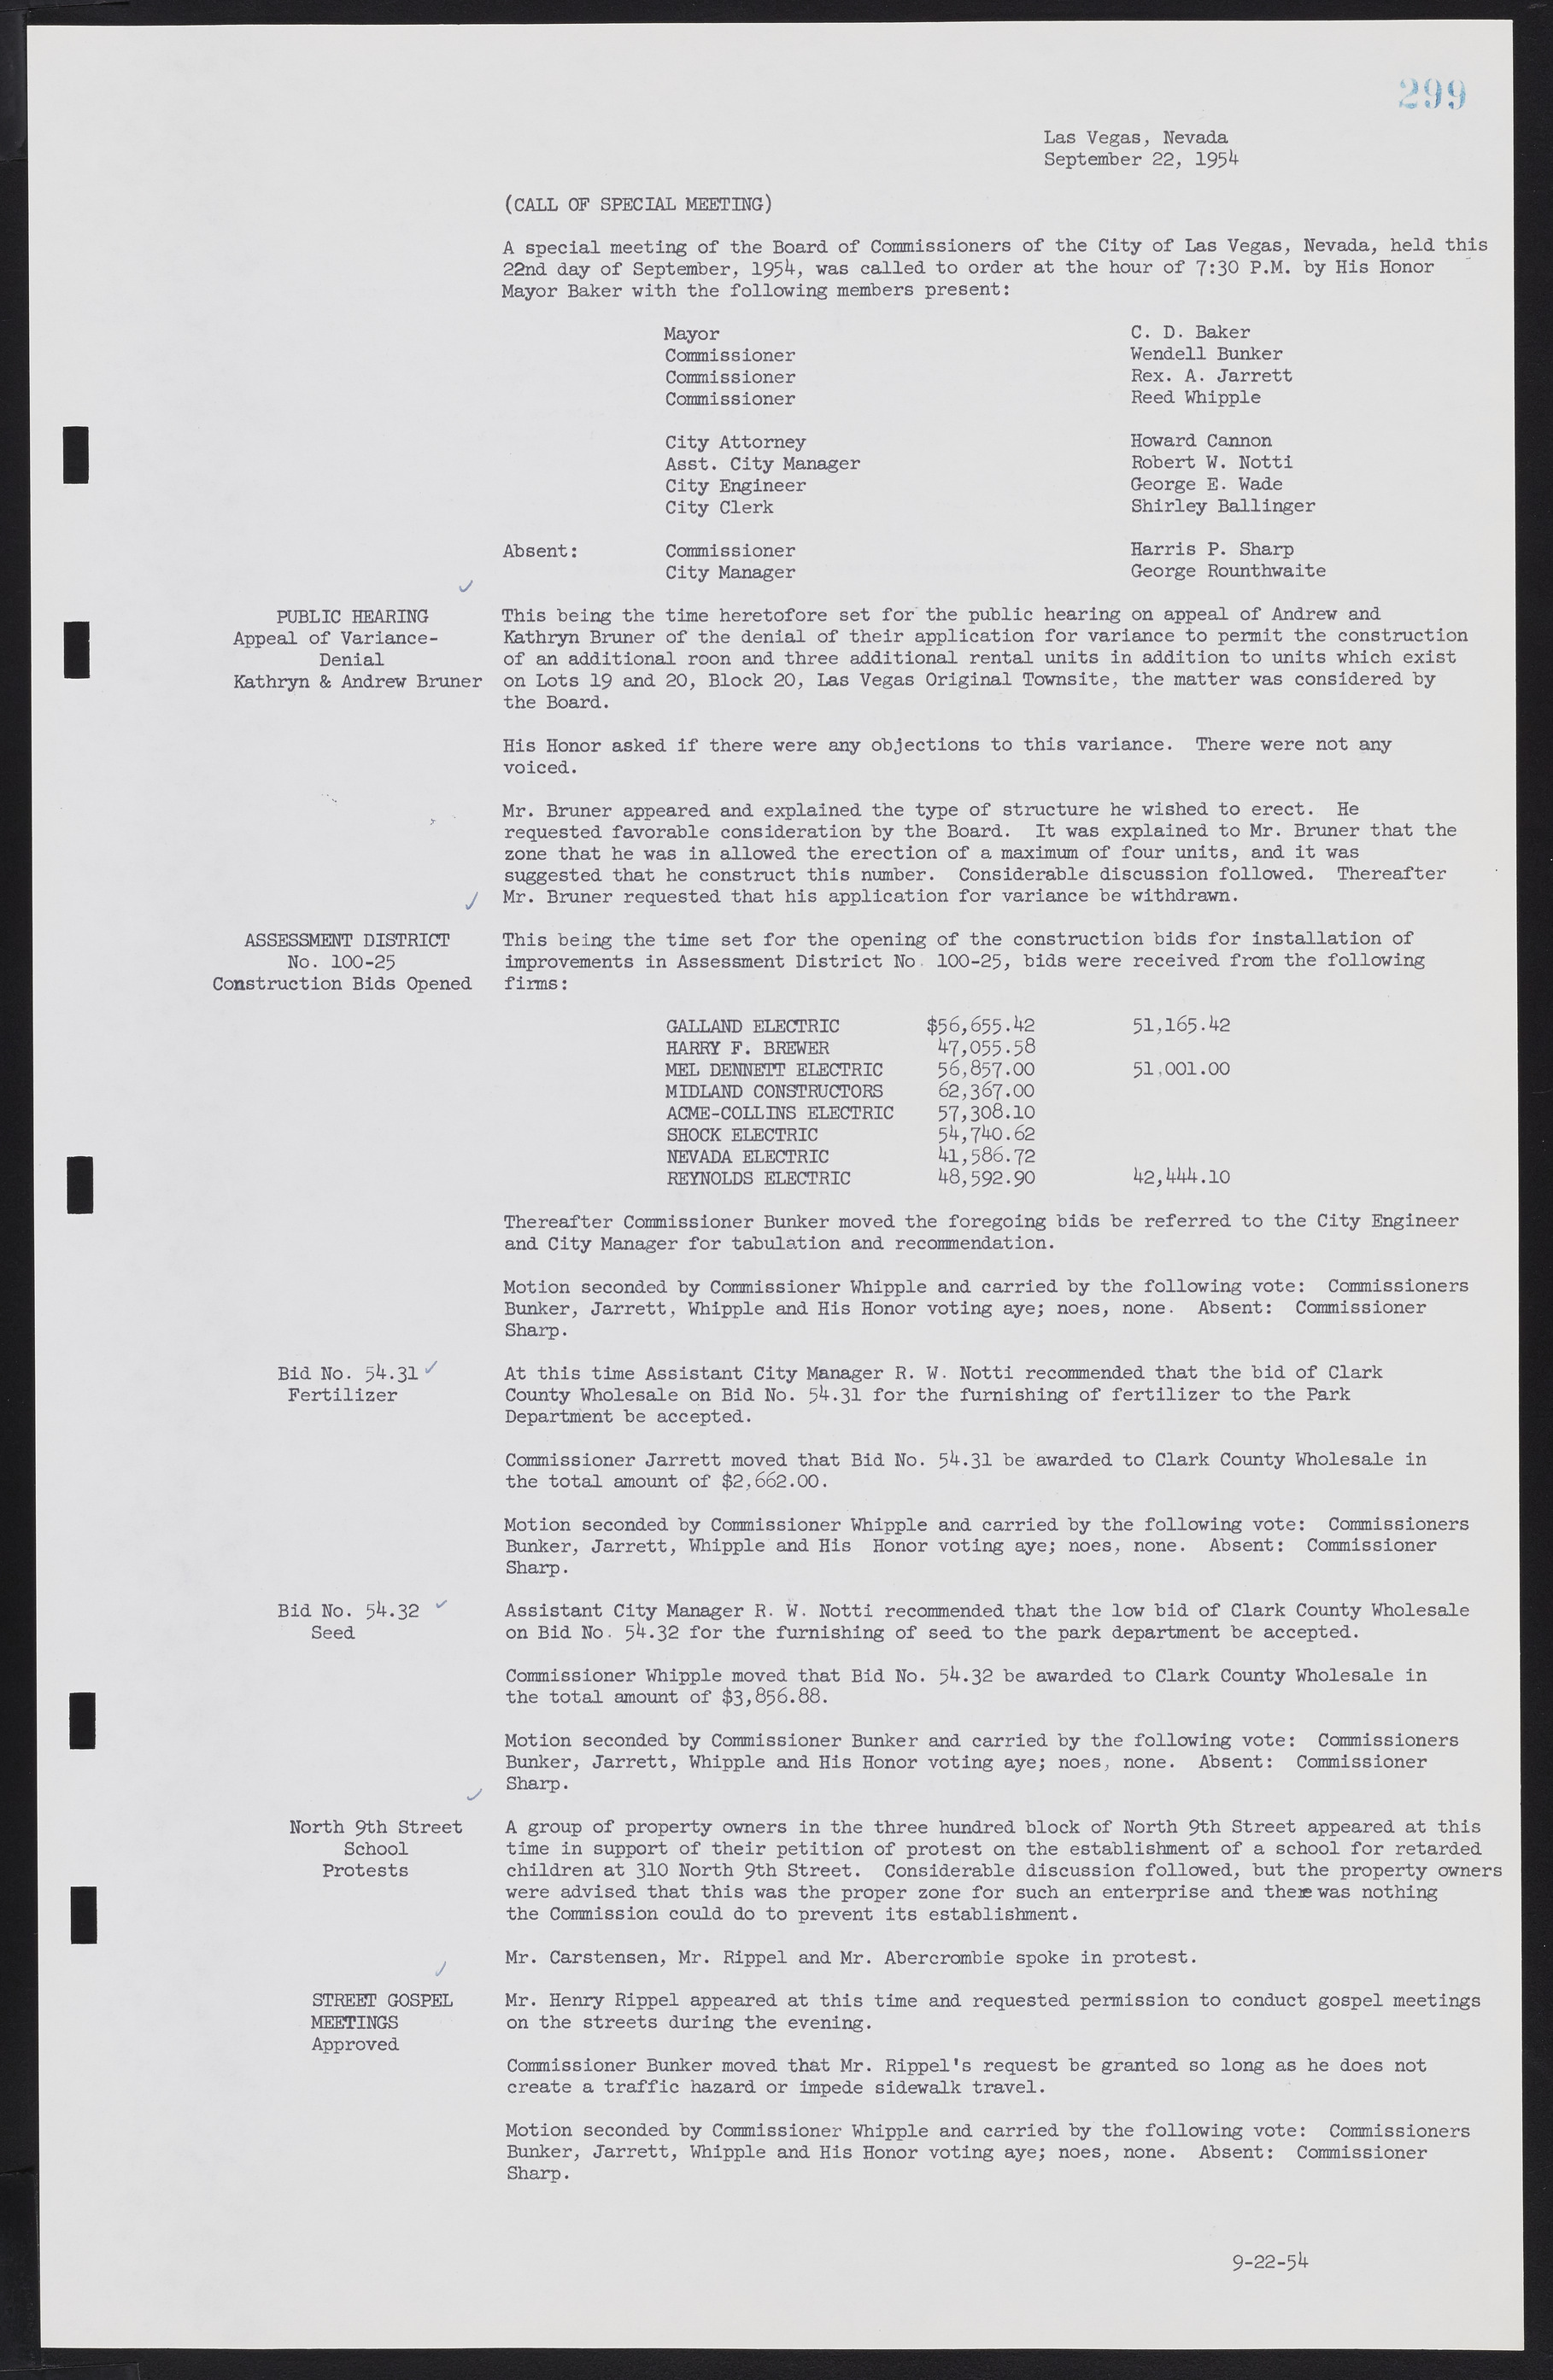 Las Vegas City Commission Minutes, February 17, 1954 to September 21, 1955, lvc000009-305